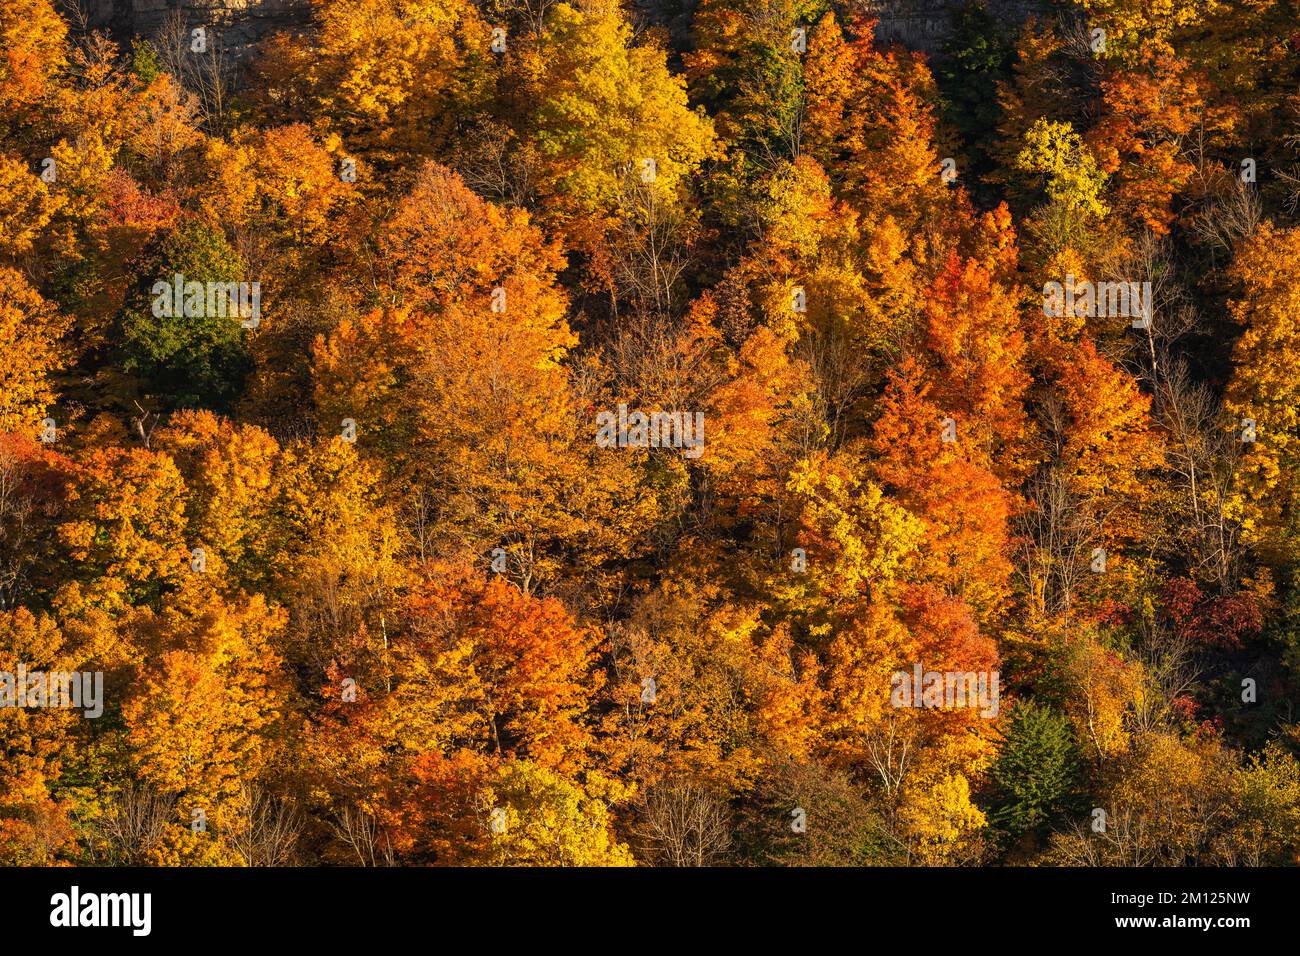 Canada, Ontario, Niagara Falls, la gorge du Niagara en automne avec toutes les couleurs de l'automne Banque D'Images